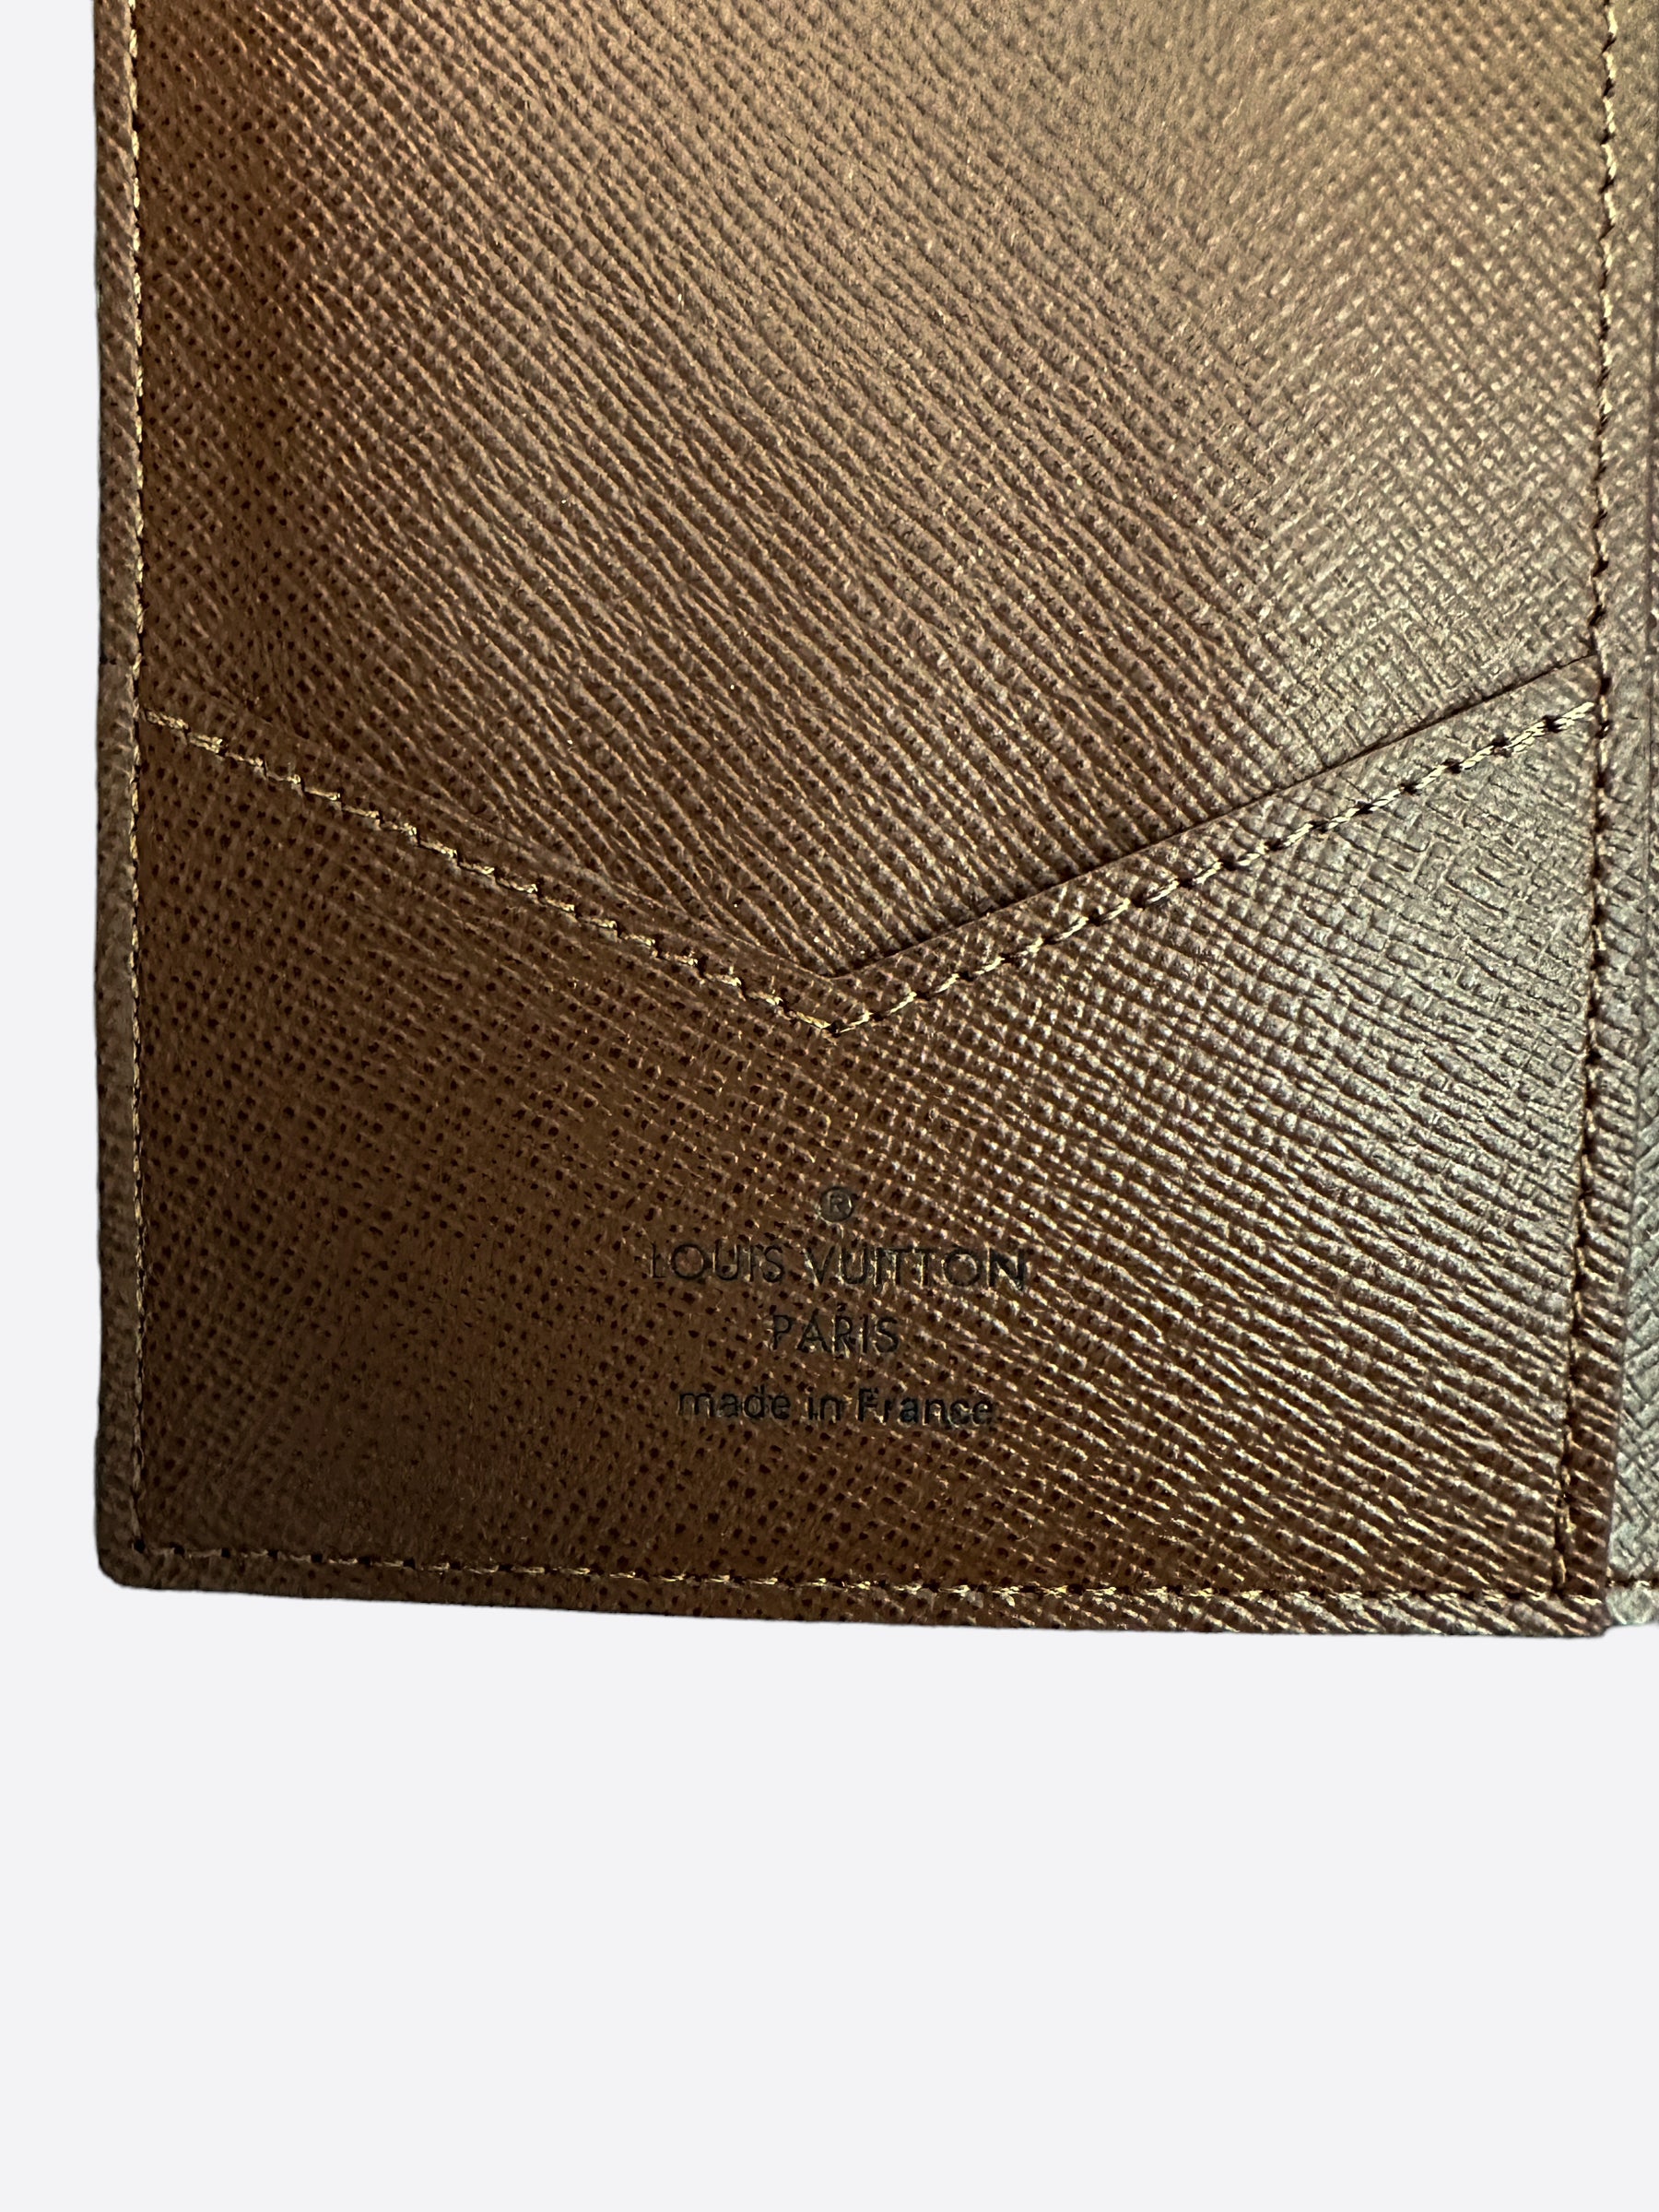 Louis Vuitton Passport Cover in Damier Ebene - SOLD